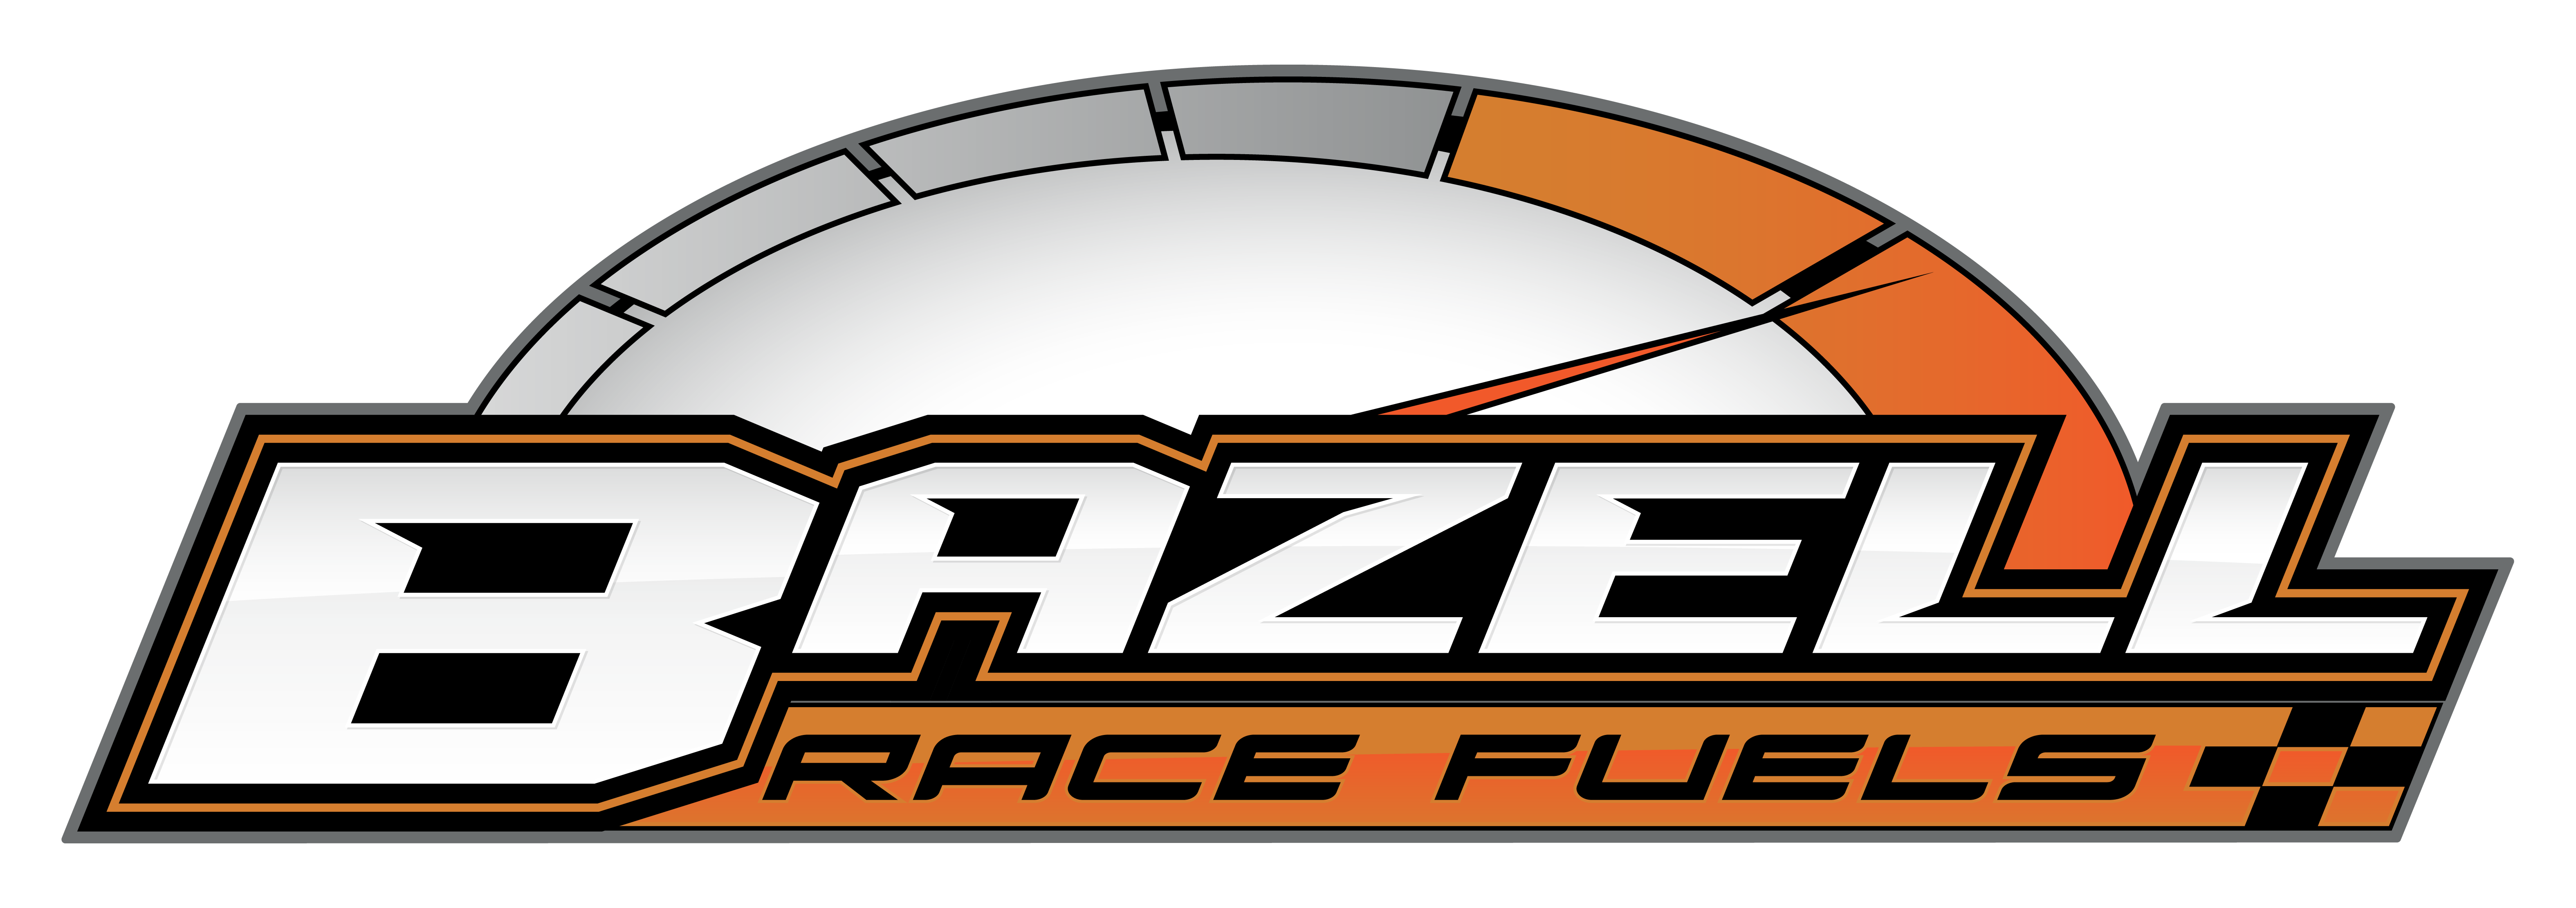 Bazell Race Fuels logo